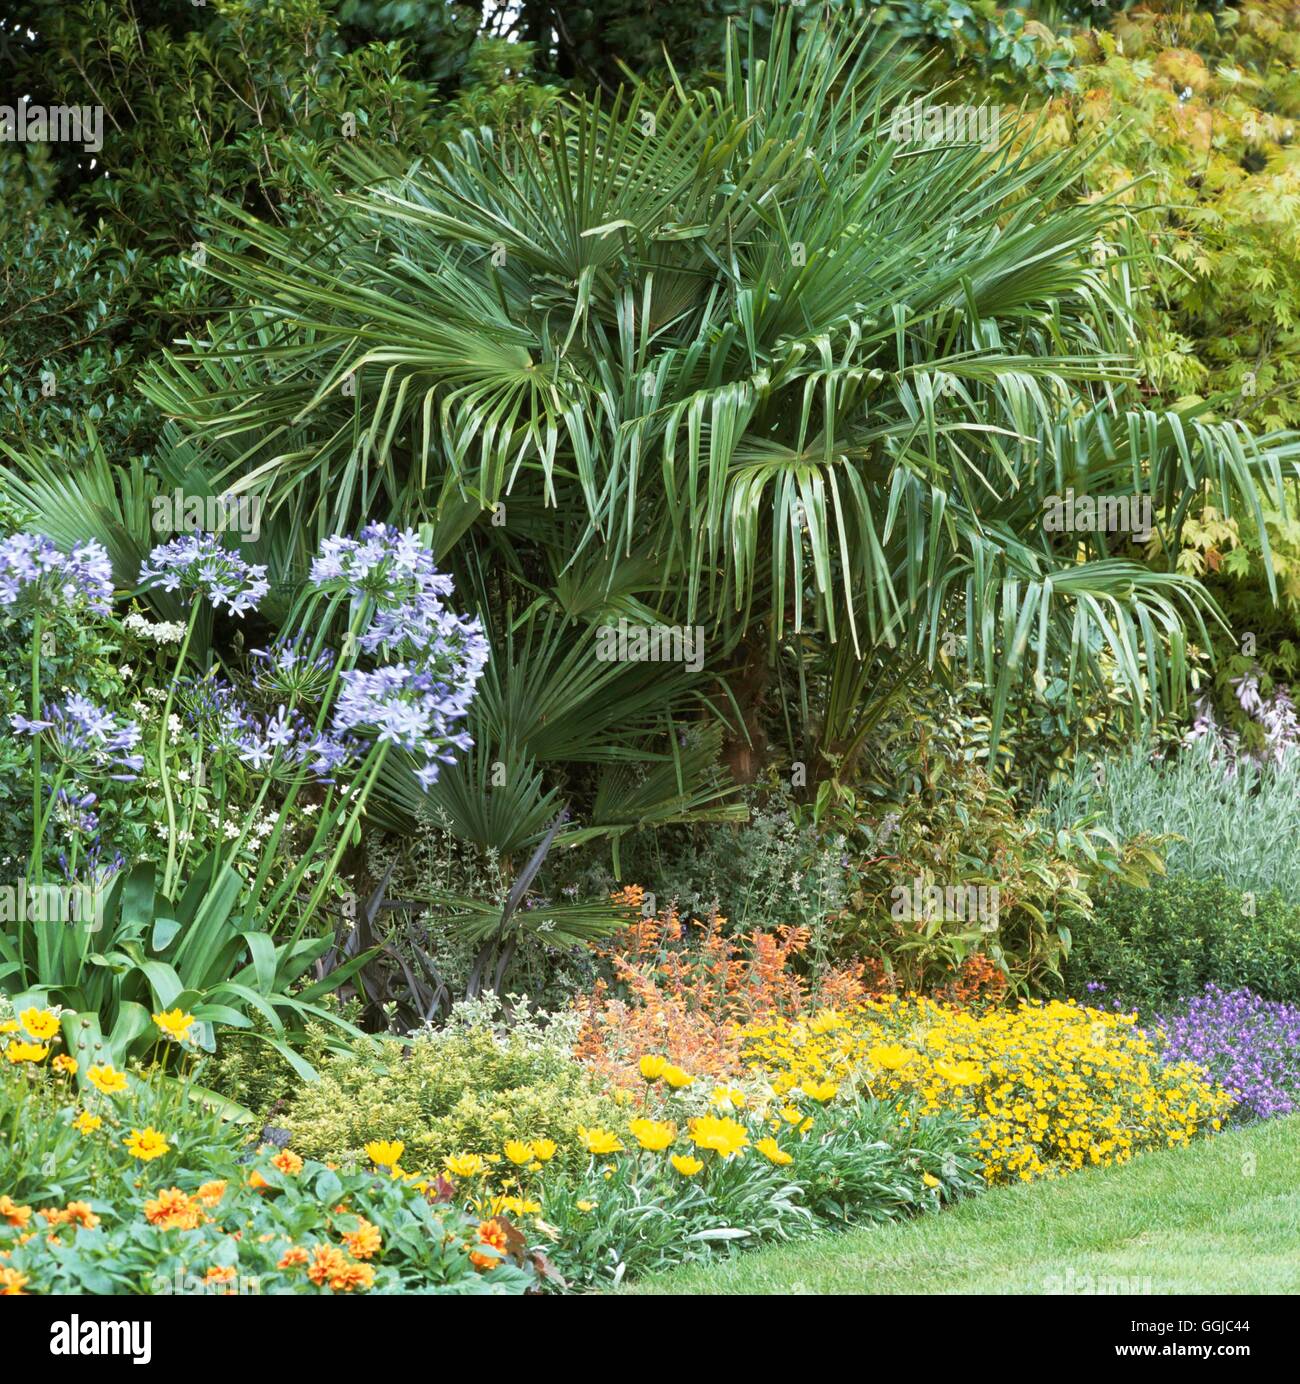 Mediterranean Style Garden - (Please credit: Photos Hort/ designer David Domoney)   MED108935     Ph Stock Photo